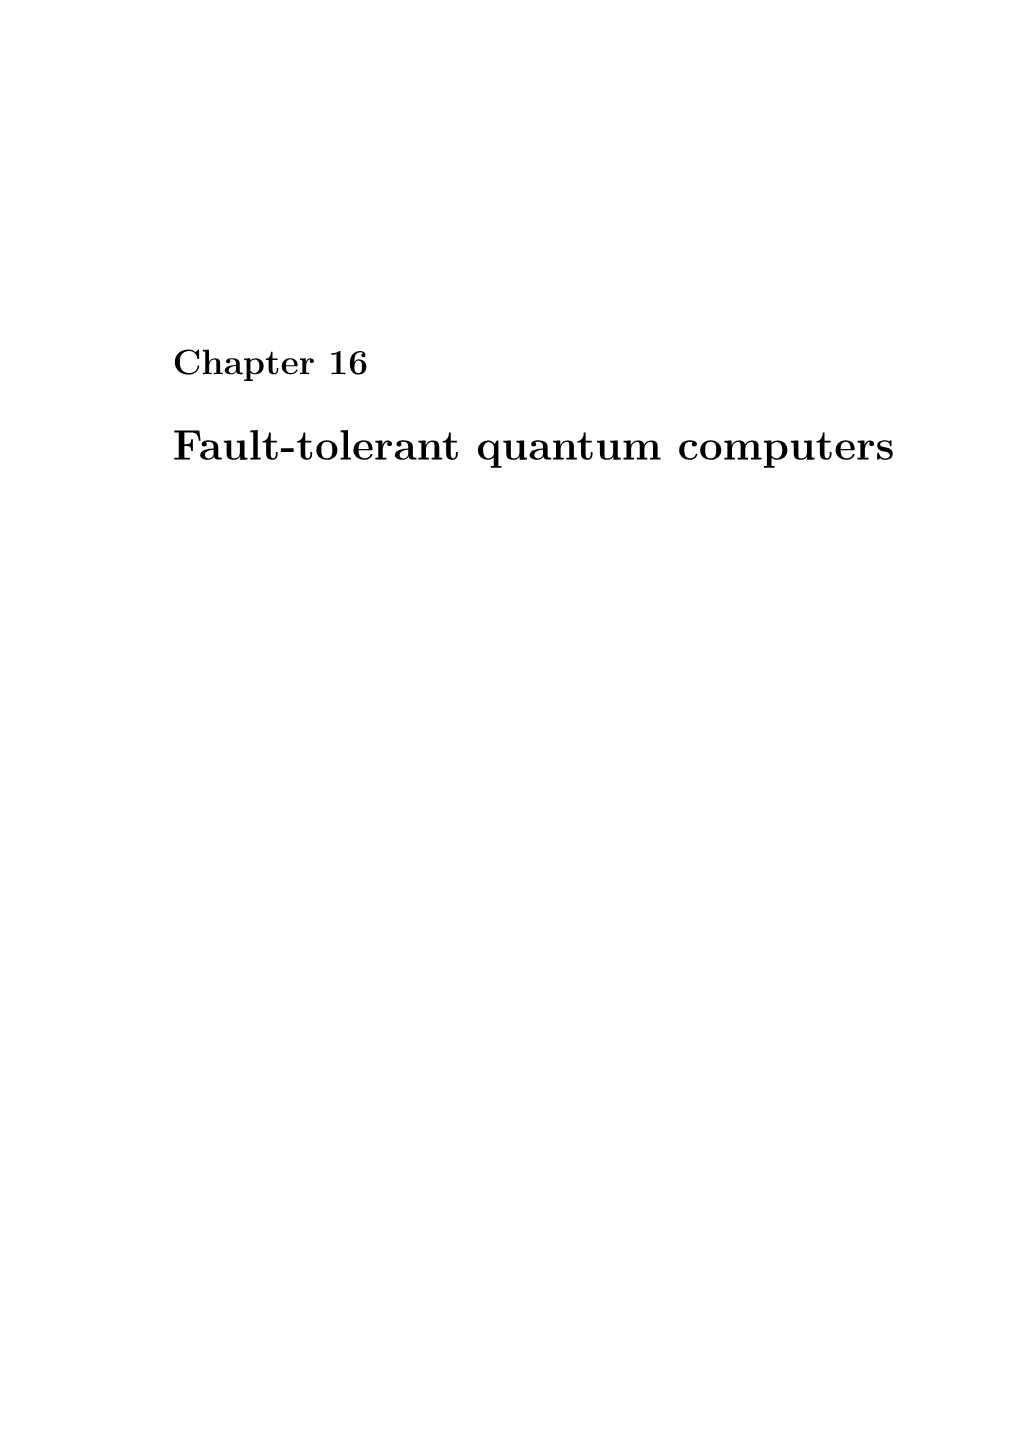 Chapter 16 Fault-Tolerant Quantum Computers